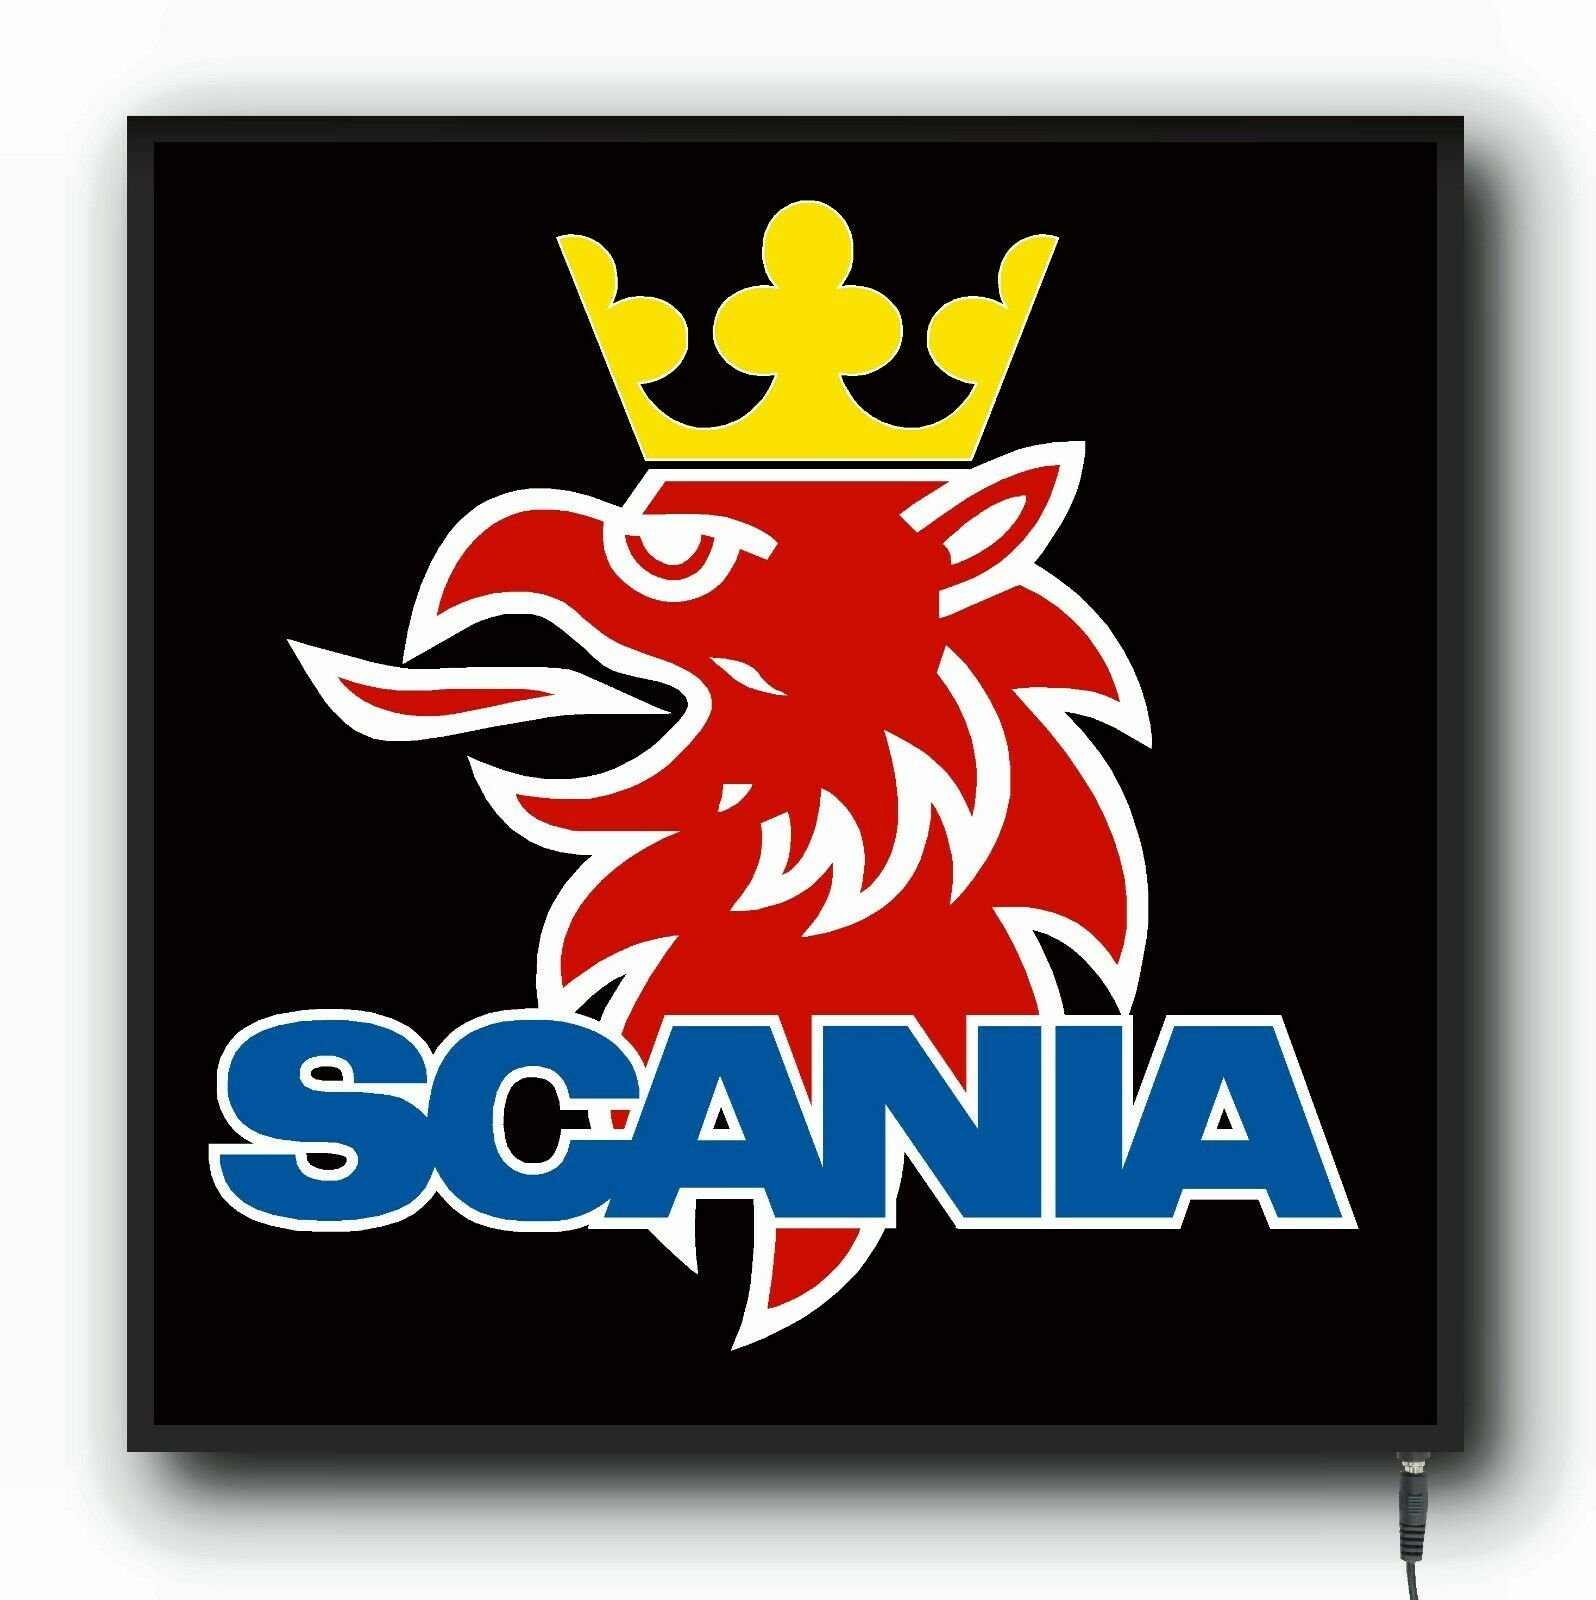 Логотип скания